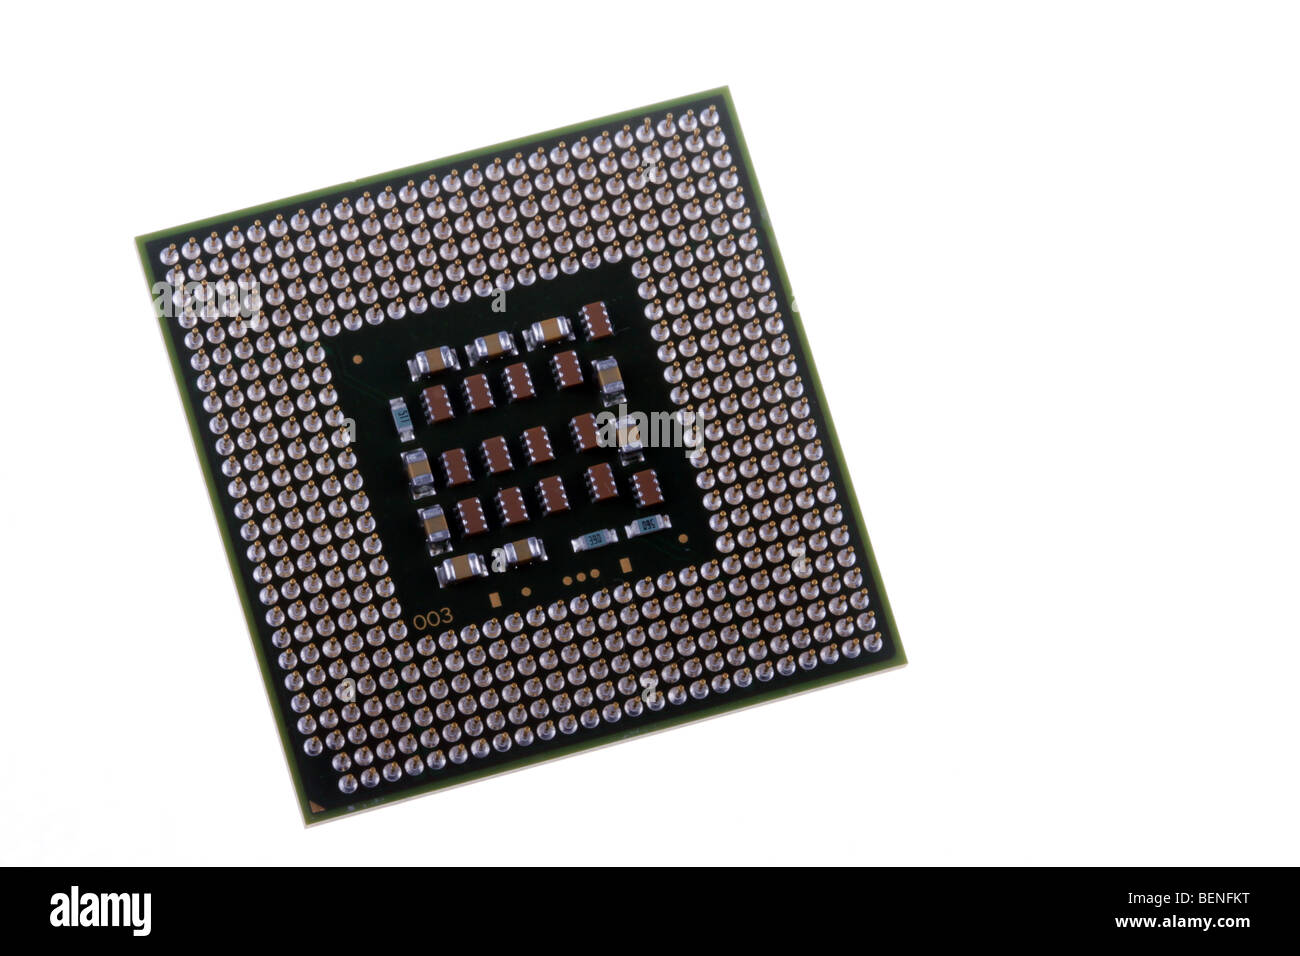 Intel Pentium 4 Socket 775 chip on a white background Stock Photo - Alamy